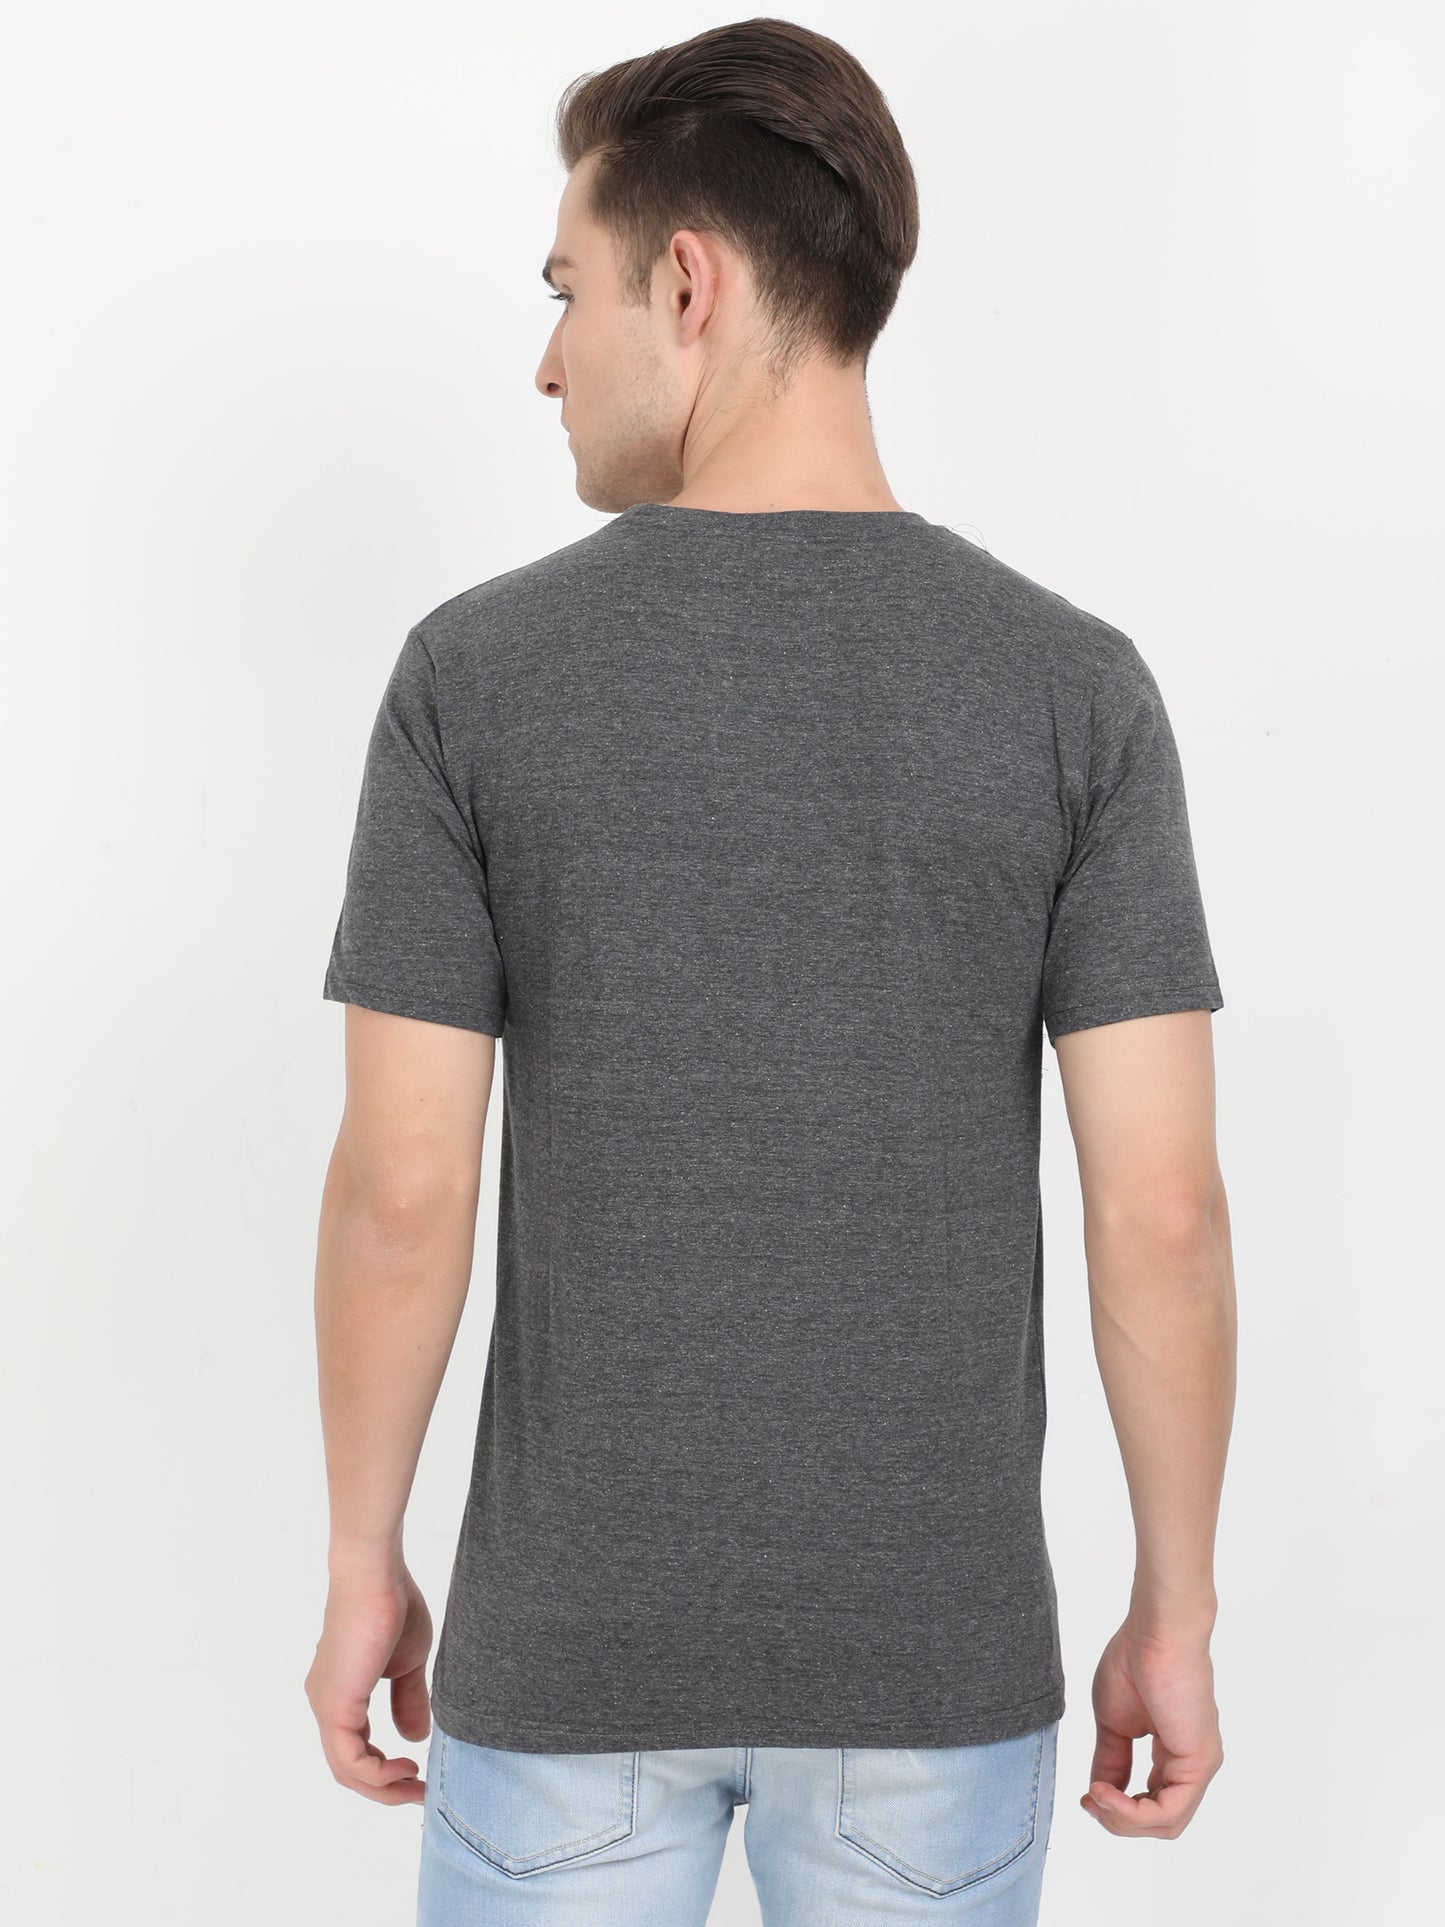 Men's Cotton Plain Round Neck Half Sleeve T-Shirt - (Pack of 2)